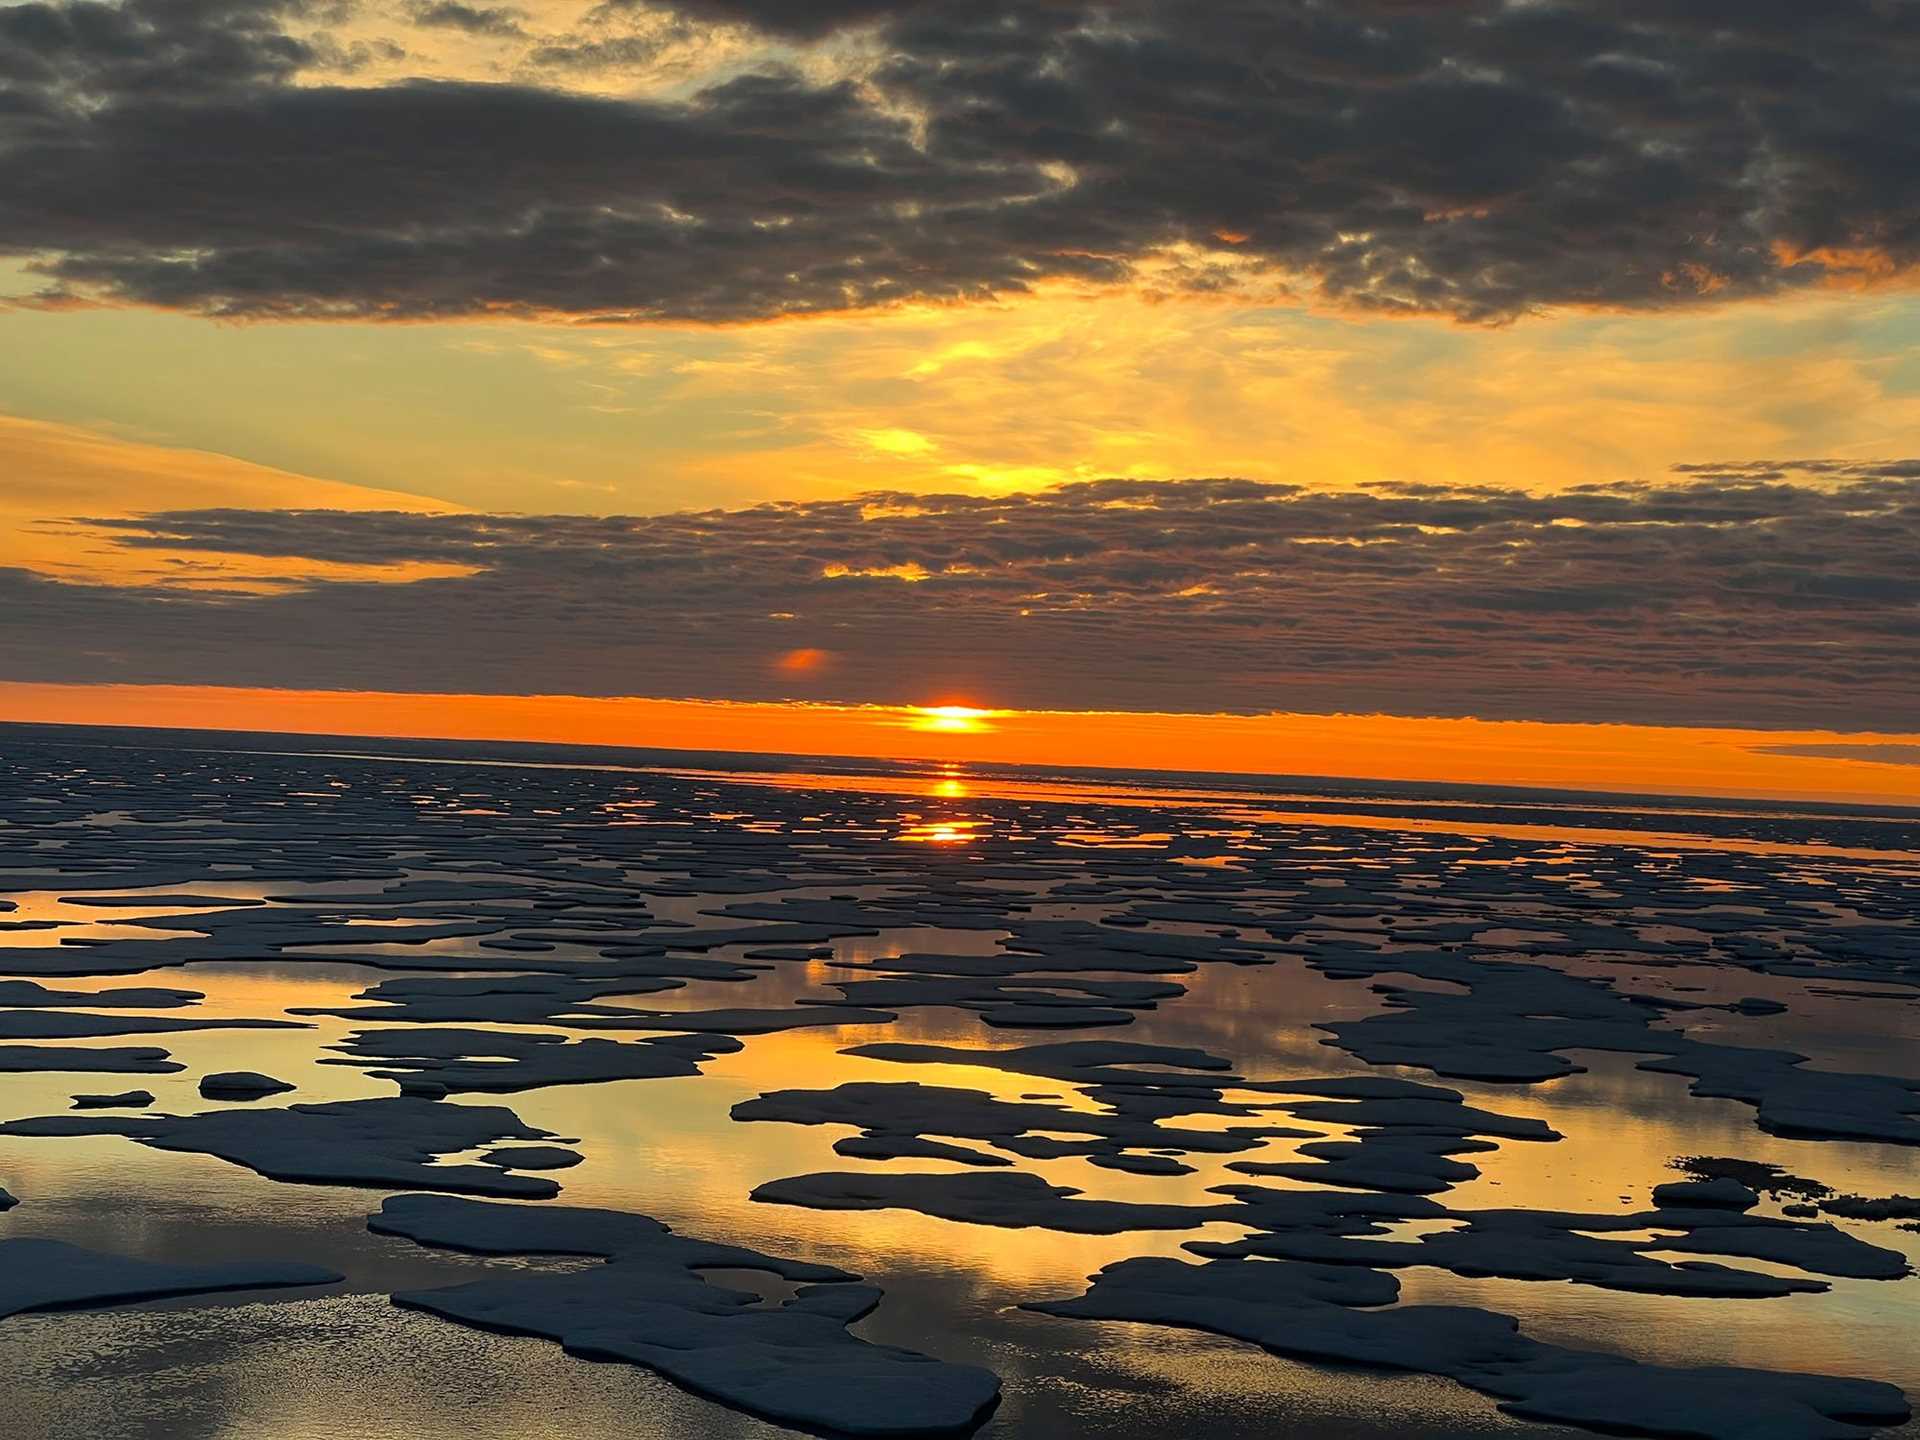 sunrise over ice